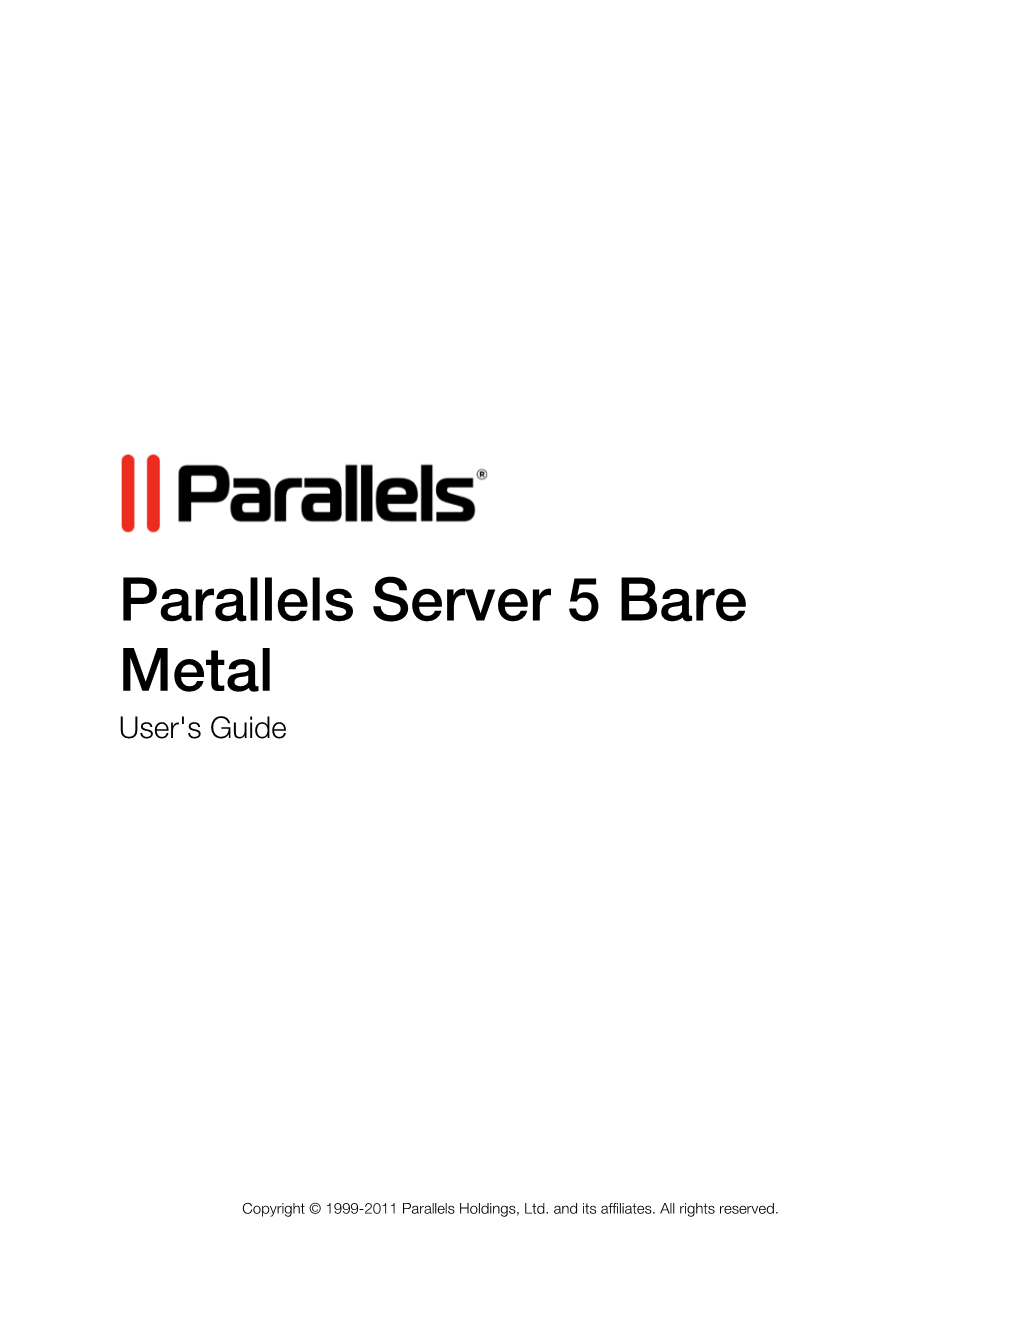 Parallels Server Bare Metal User Guide 5